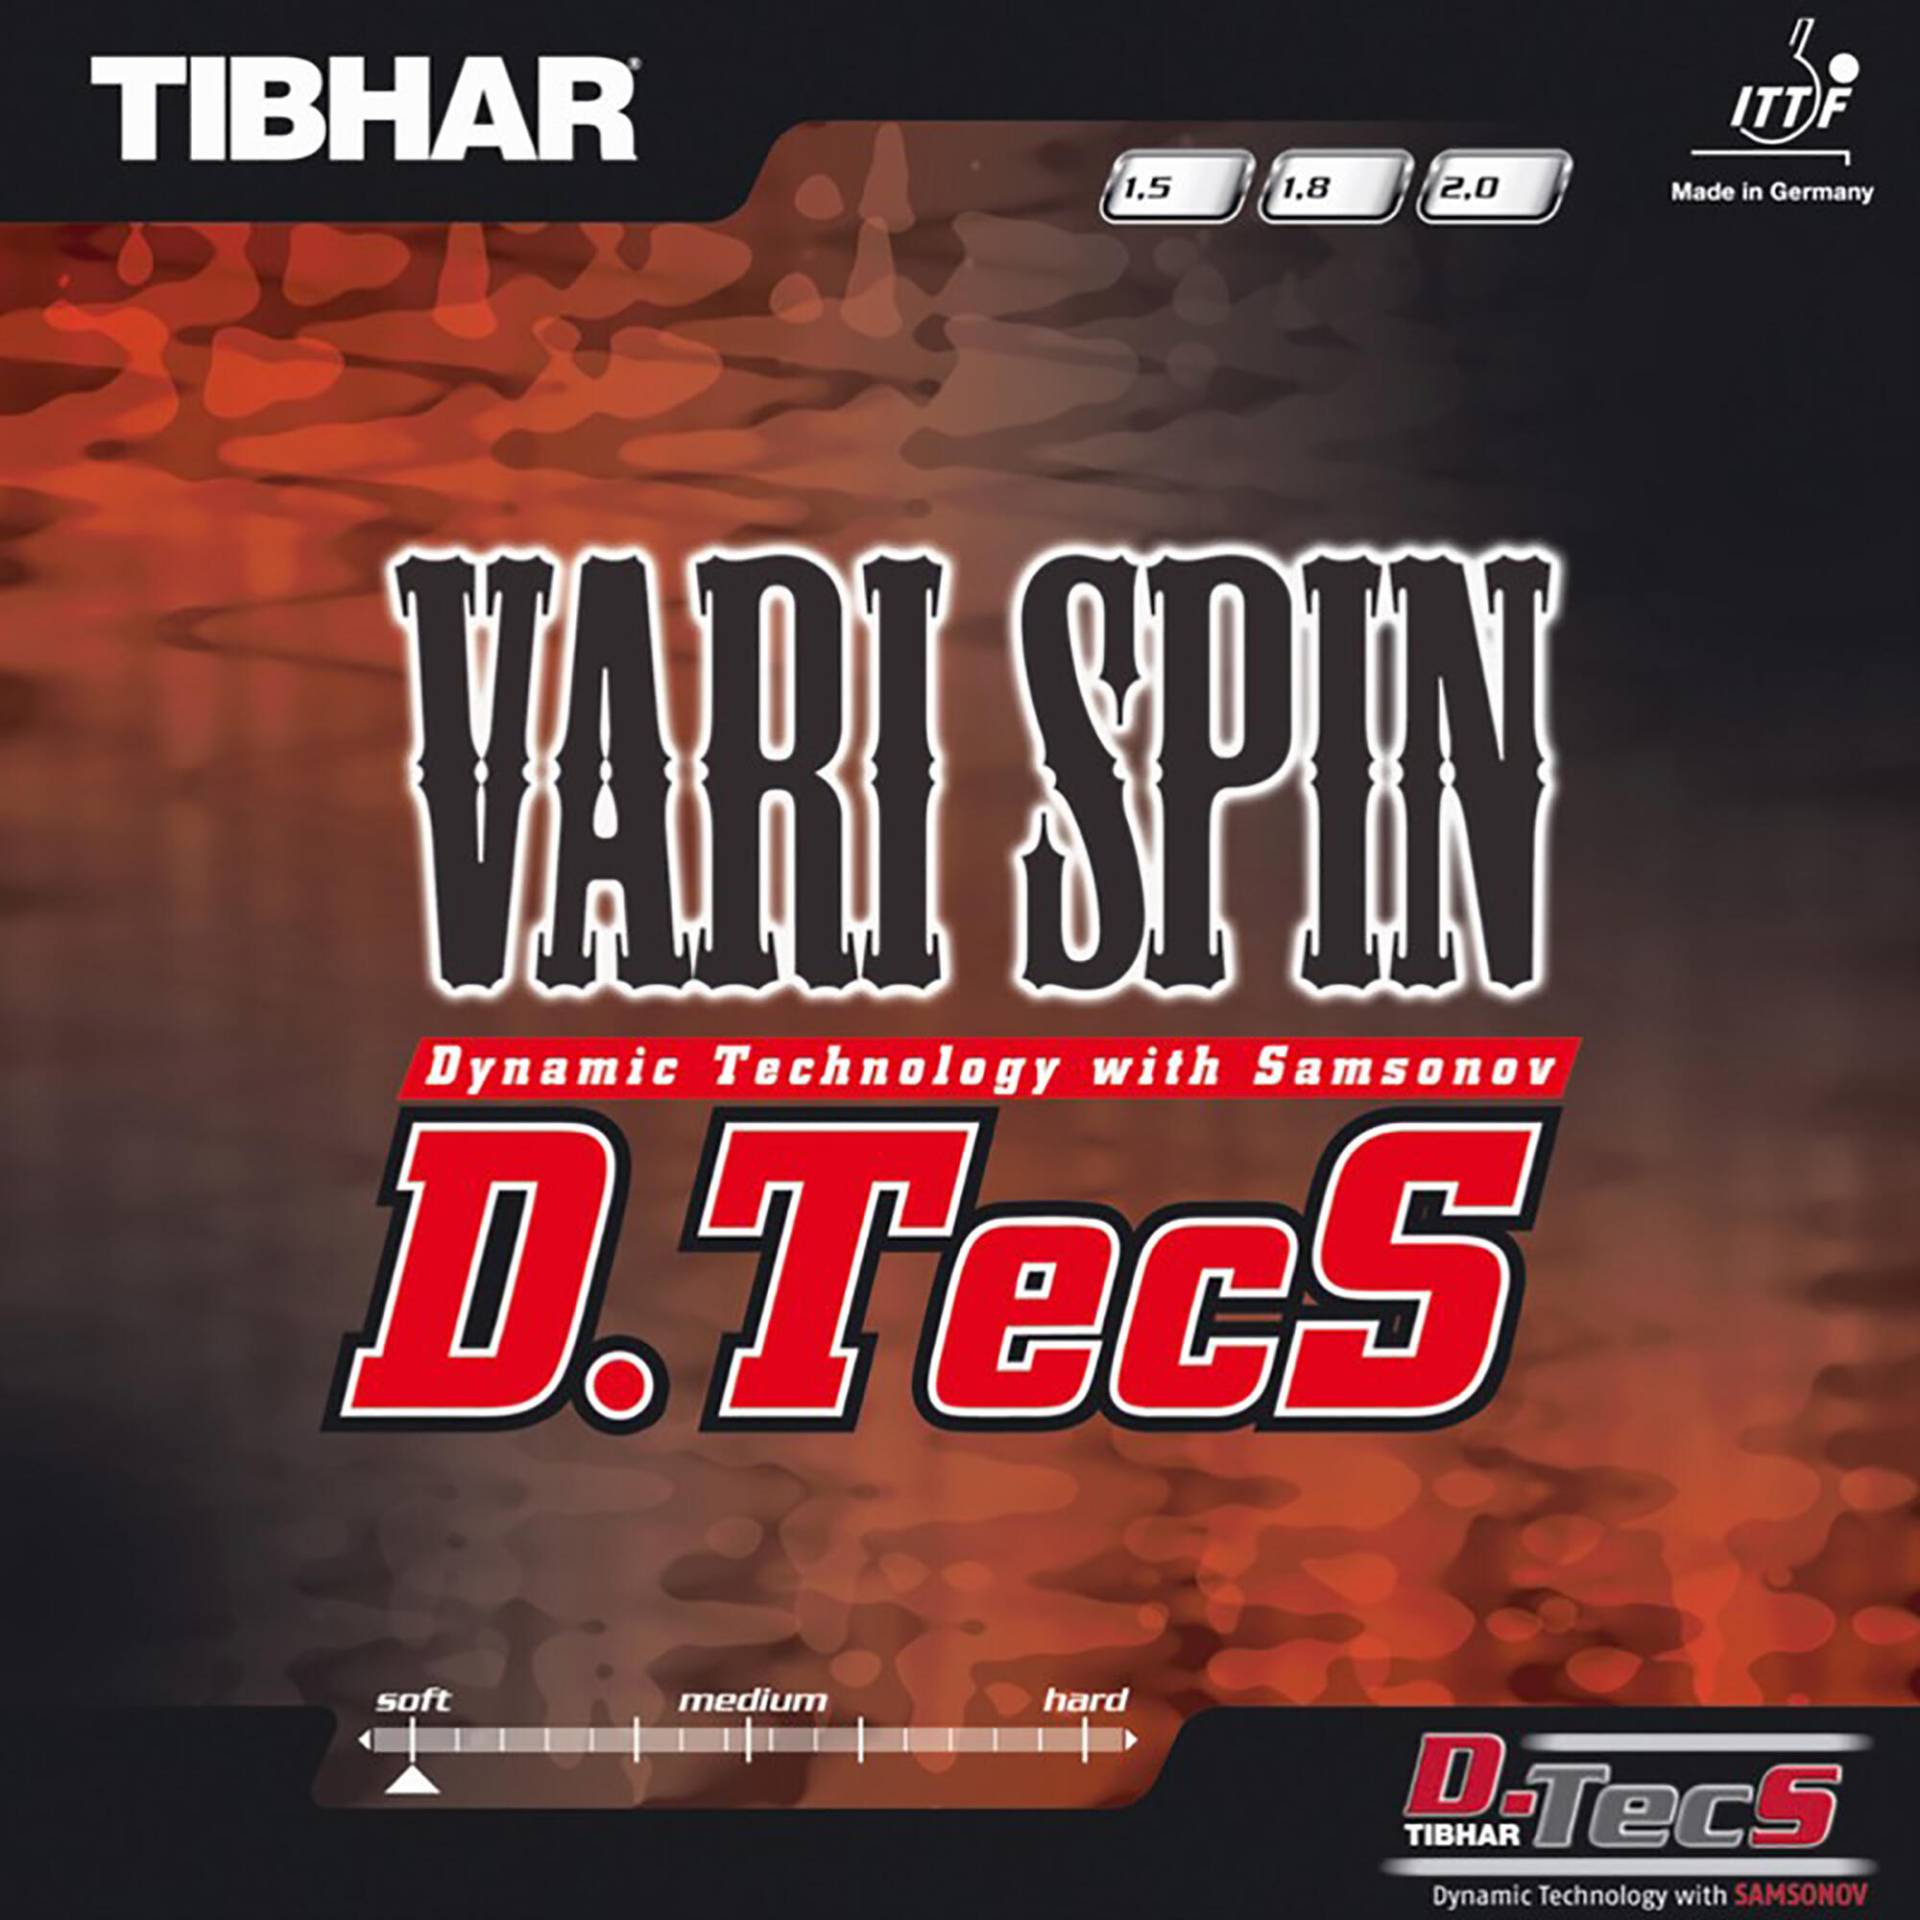 Tischtennisbelag Vari Spin D.TecS von TIBHAR